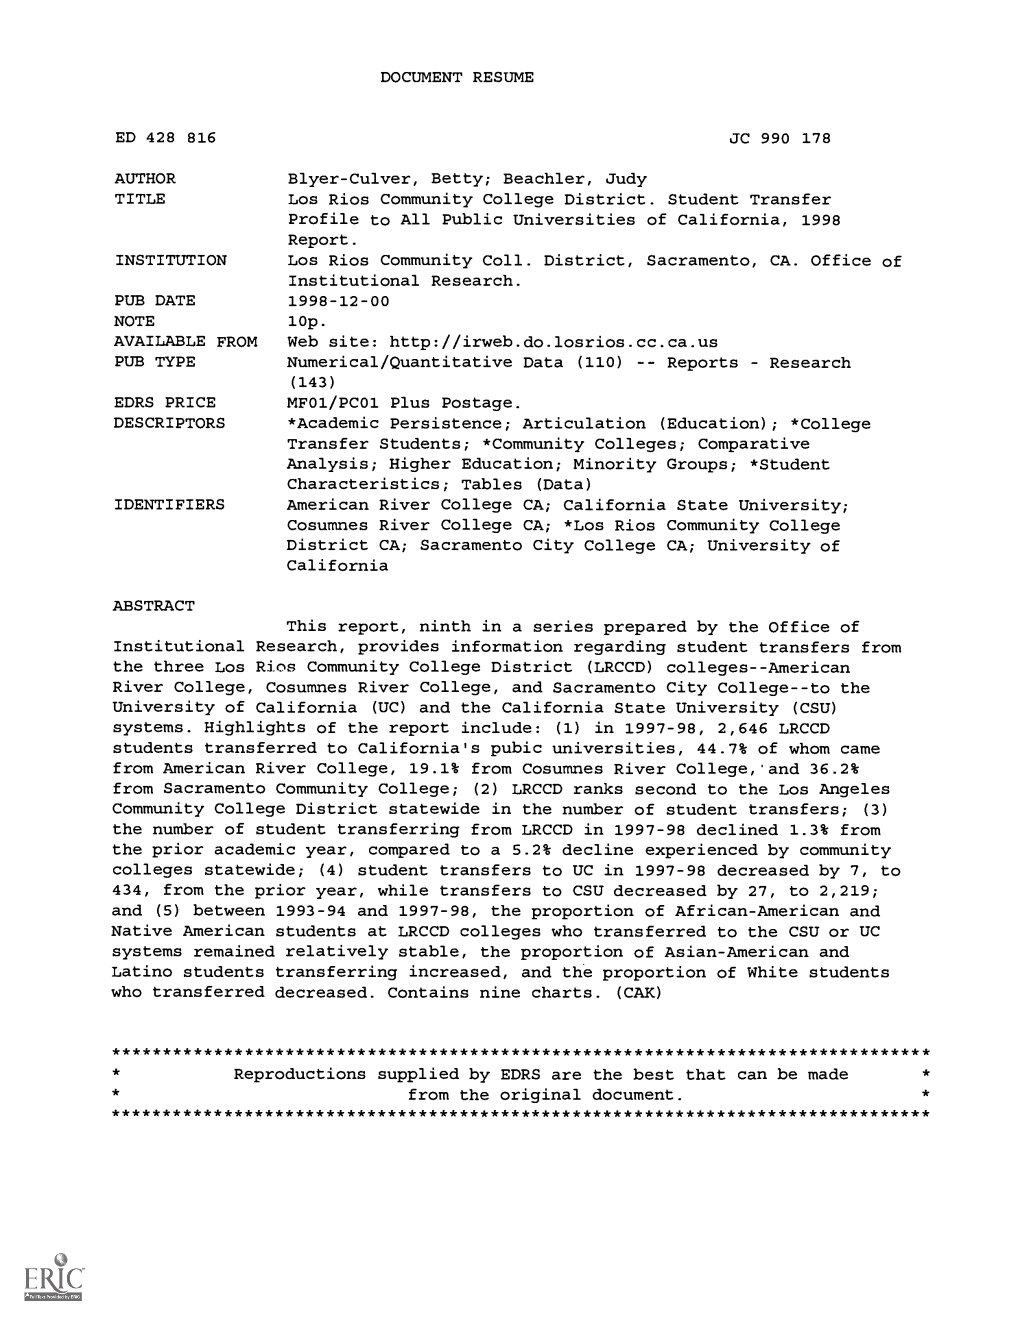 Los Rios Community College District. Student Transfer Profile to All Public Universities of California, 1998 Report